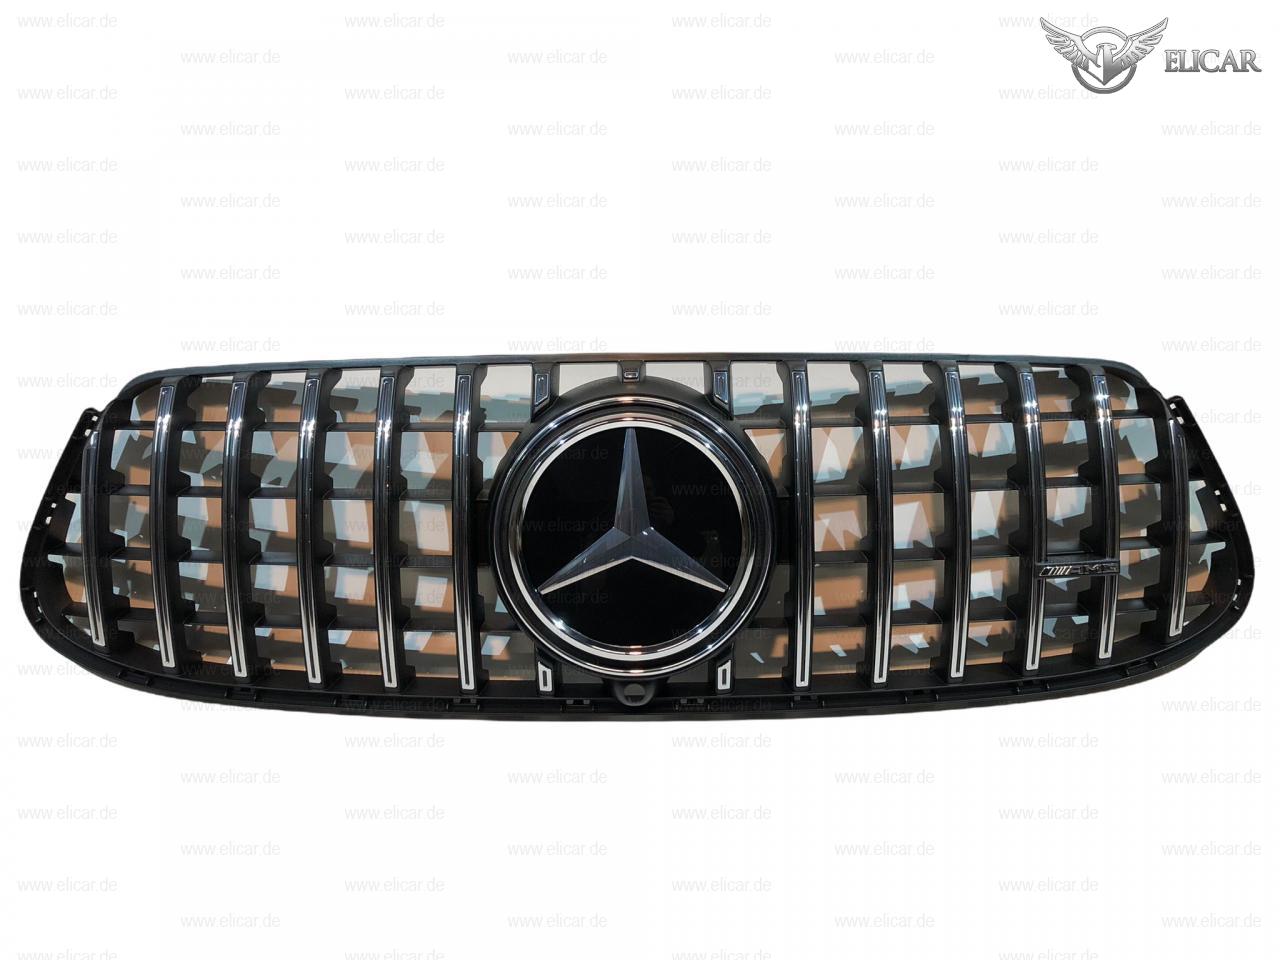 Panamericana Grill / Kühlerverkleidung GLE63 AMG für Mercedes-Benz 